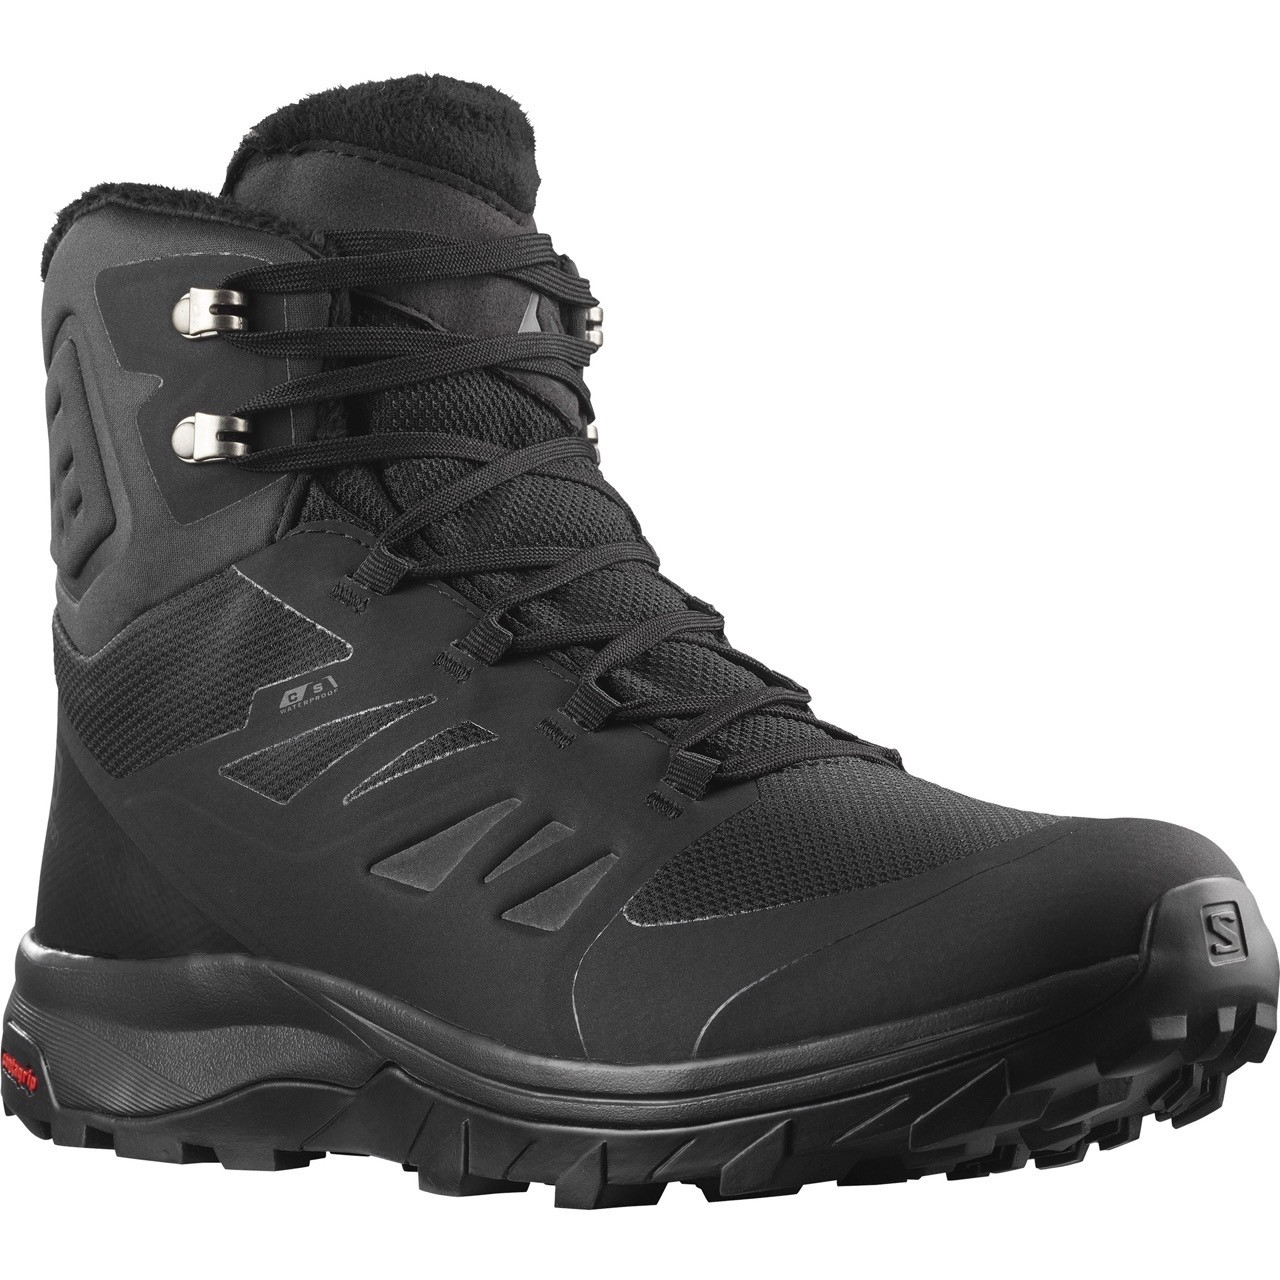 Salomon Men's Winter Hiking Boots